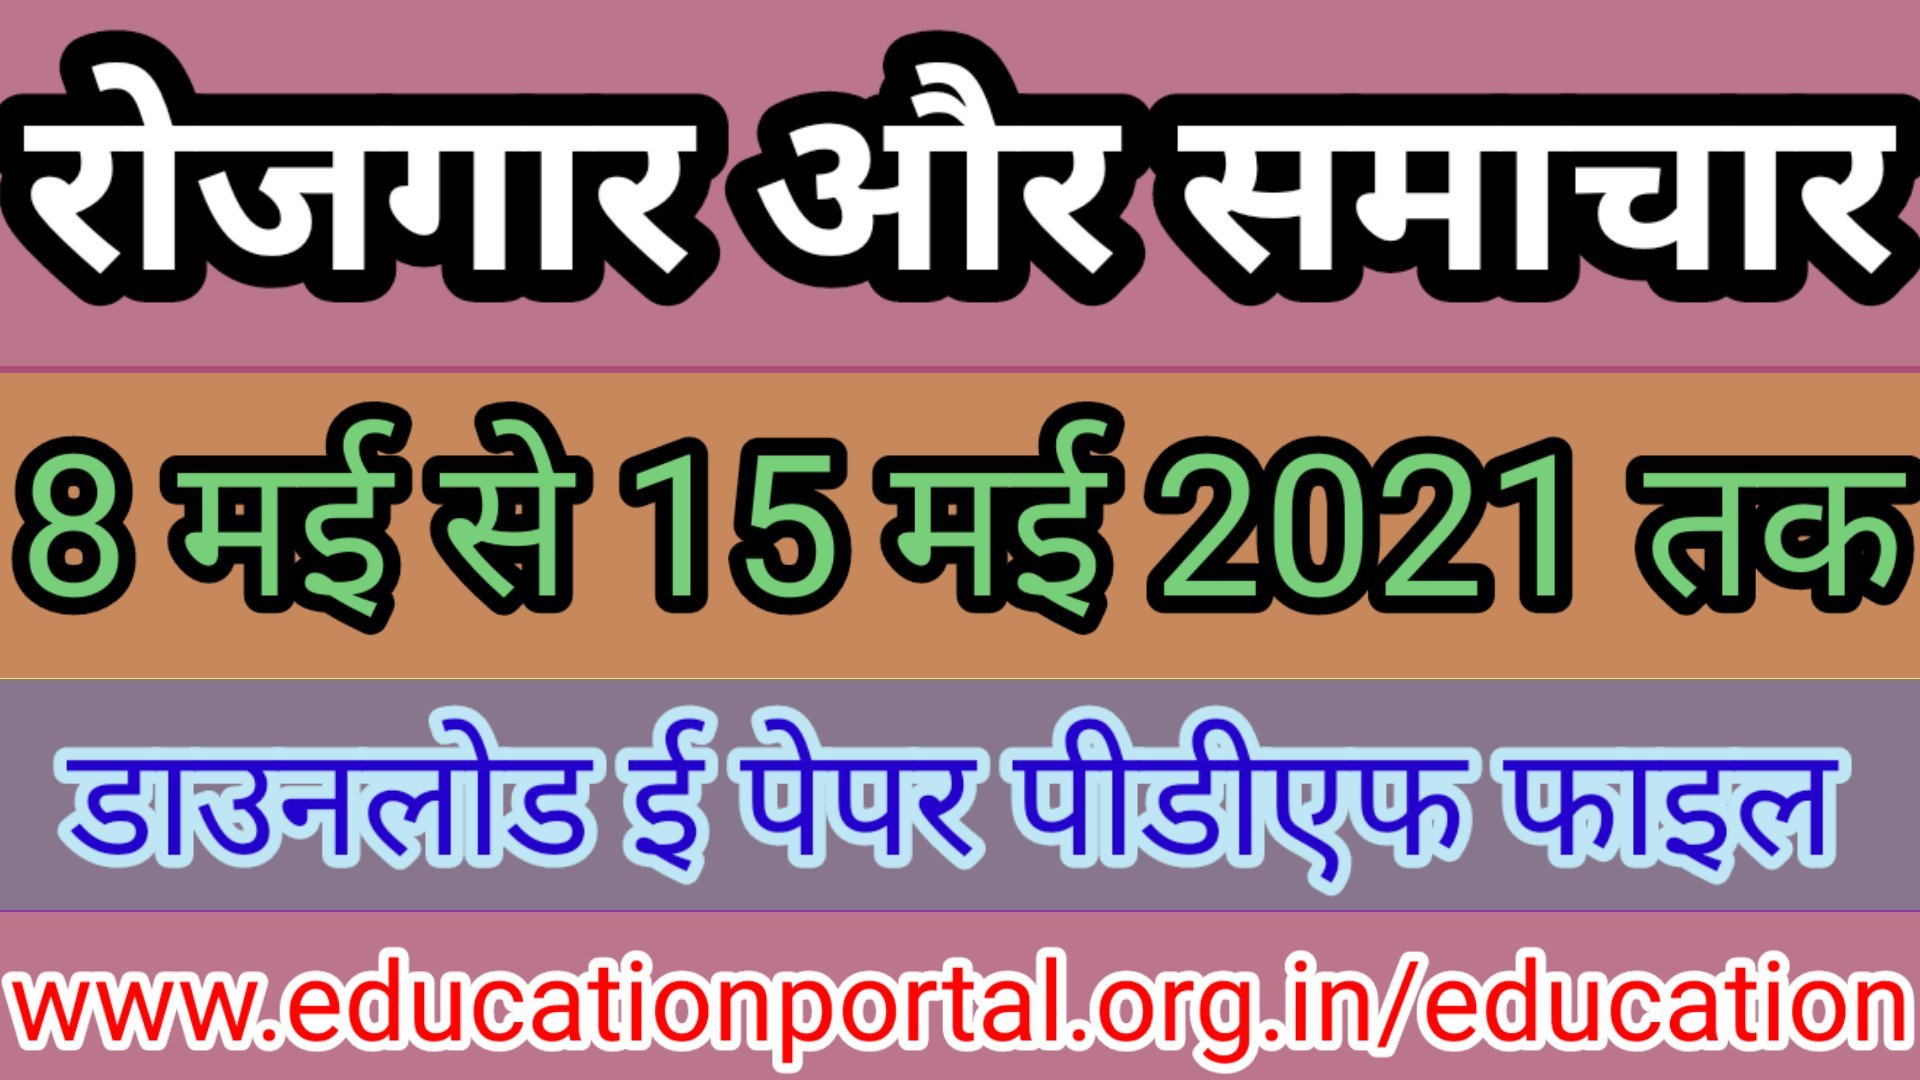 रोजगार समाचार ईपेपर Employment news epaper 8 may to14 may 2021 Hindi and English version